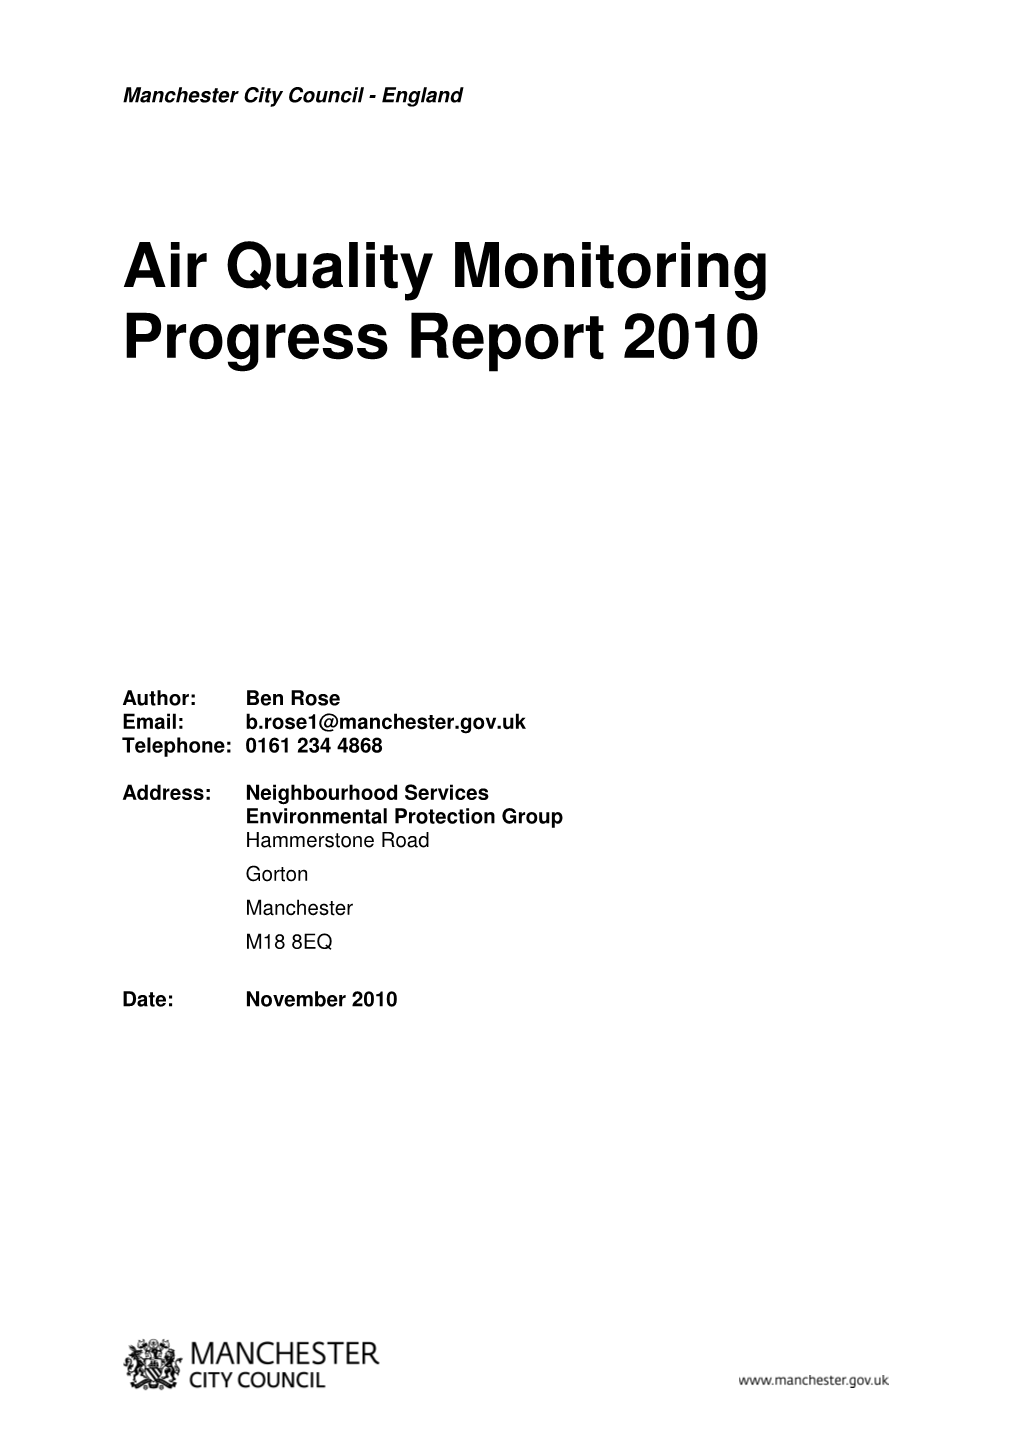 Air Quality Monitoring Progress Report 2010